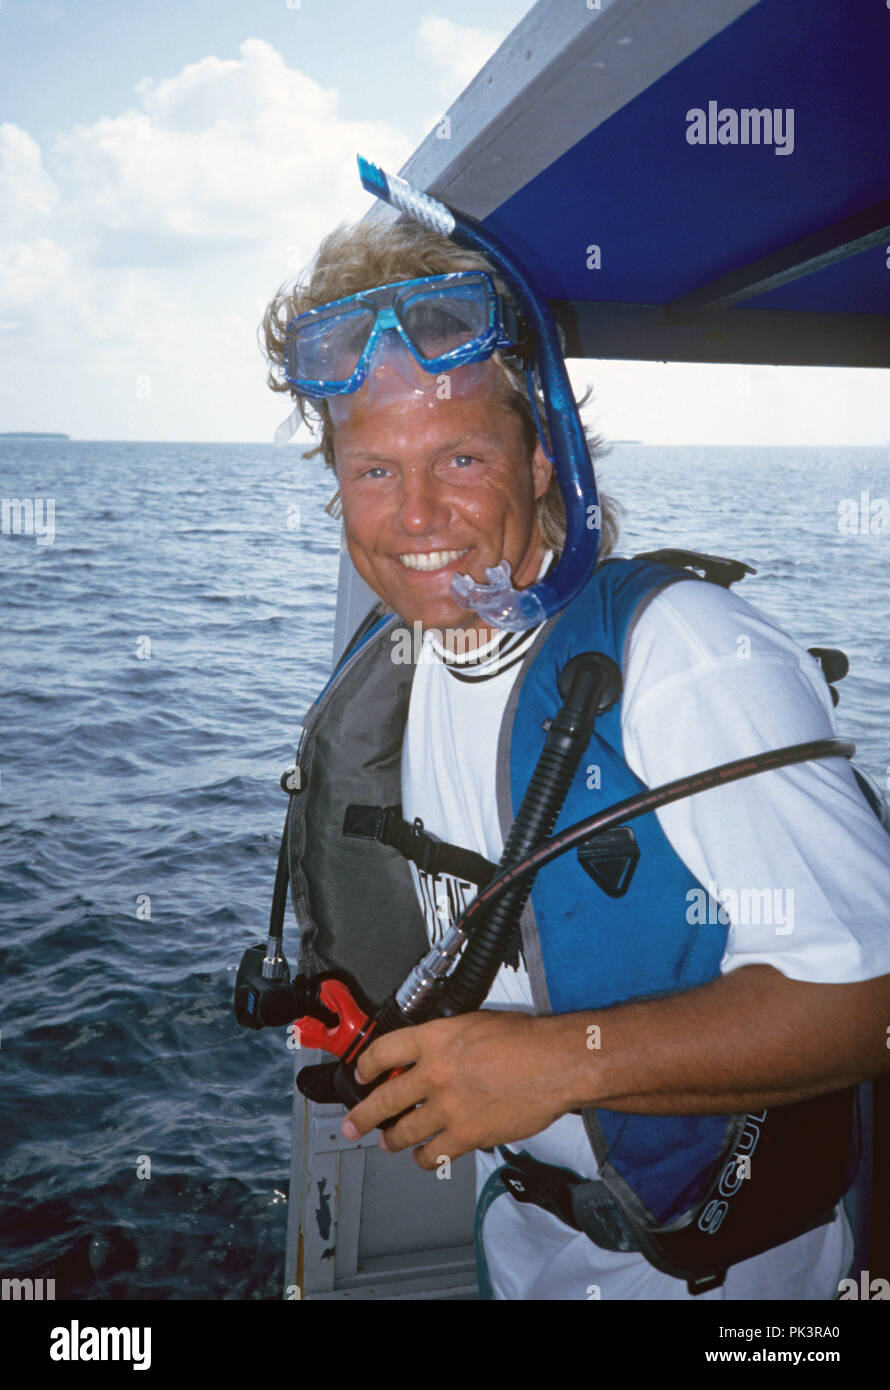 Dieter Bohlen in December 1992 in Malediven / Maldives. | usage ...